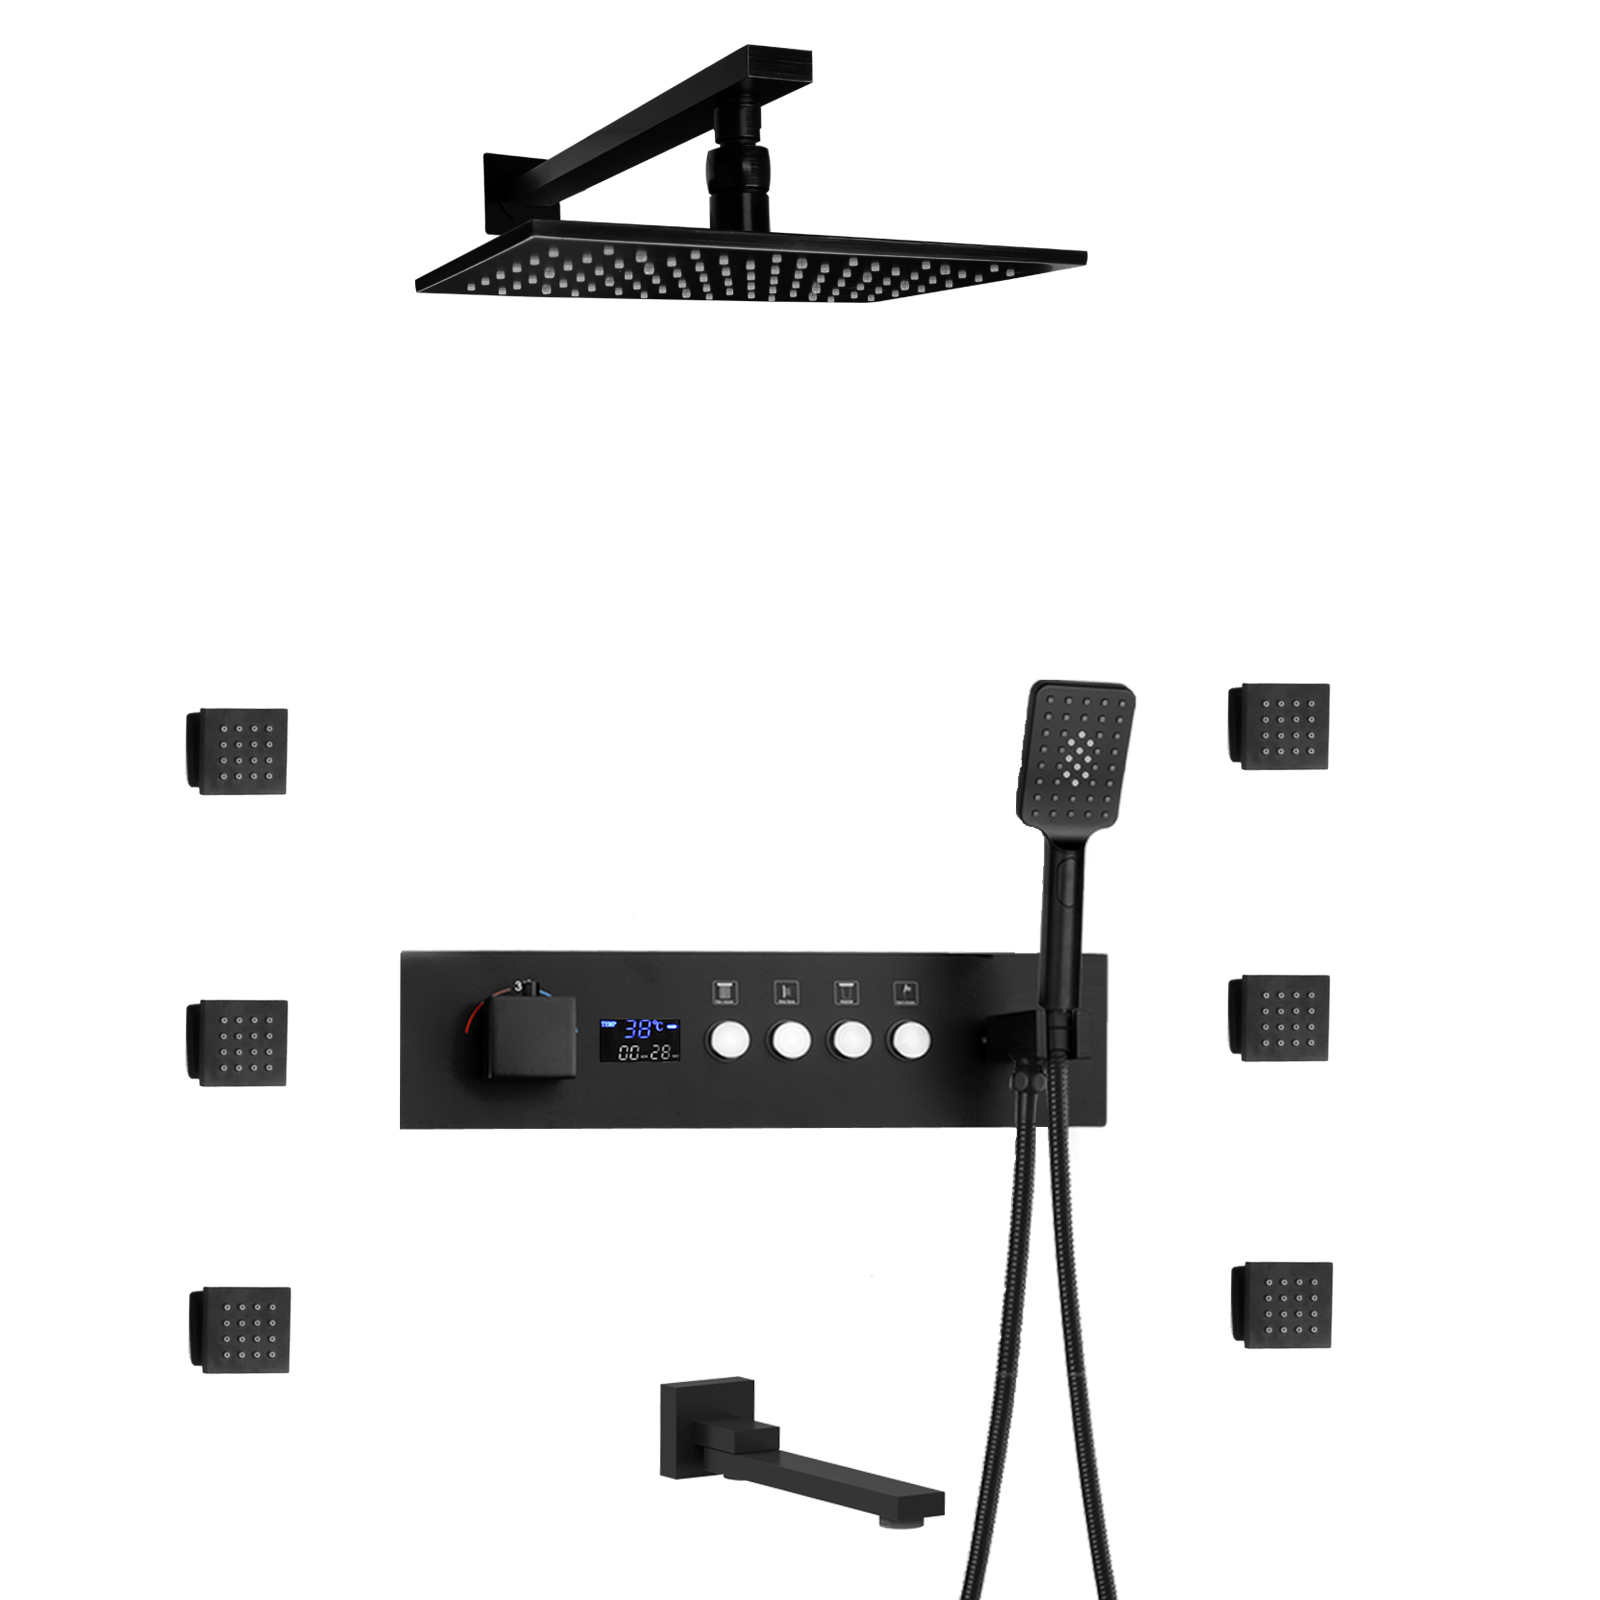 Bathroom Matte Black LED Rain Dumpy System Brass Mixer Kit Number Shows Constant Warm Warm Shower Head System